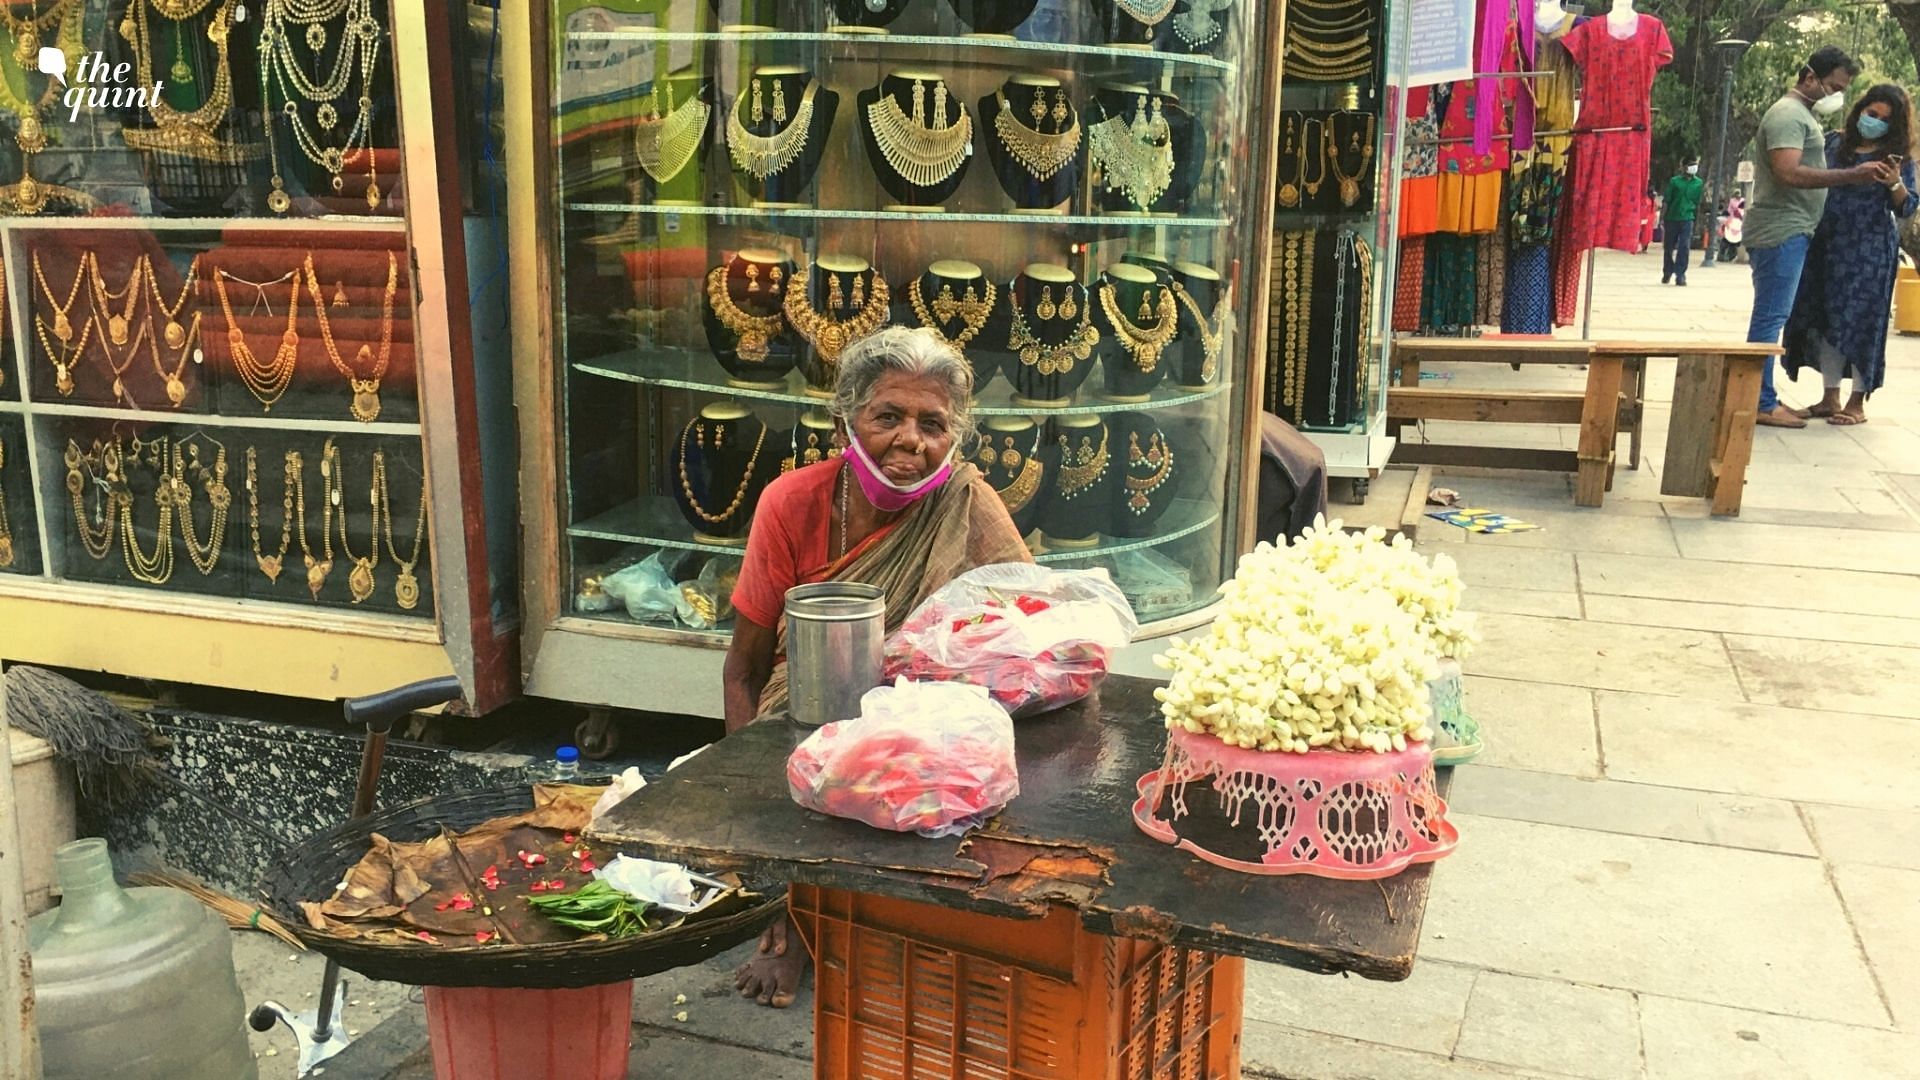 <div class="paragraphs"><p>Representational image of woman running a small shop.</p></div>